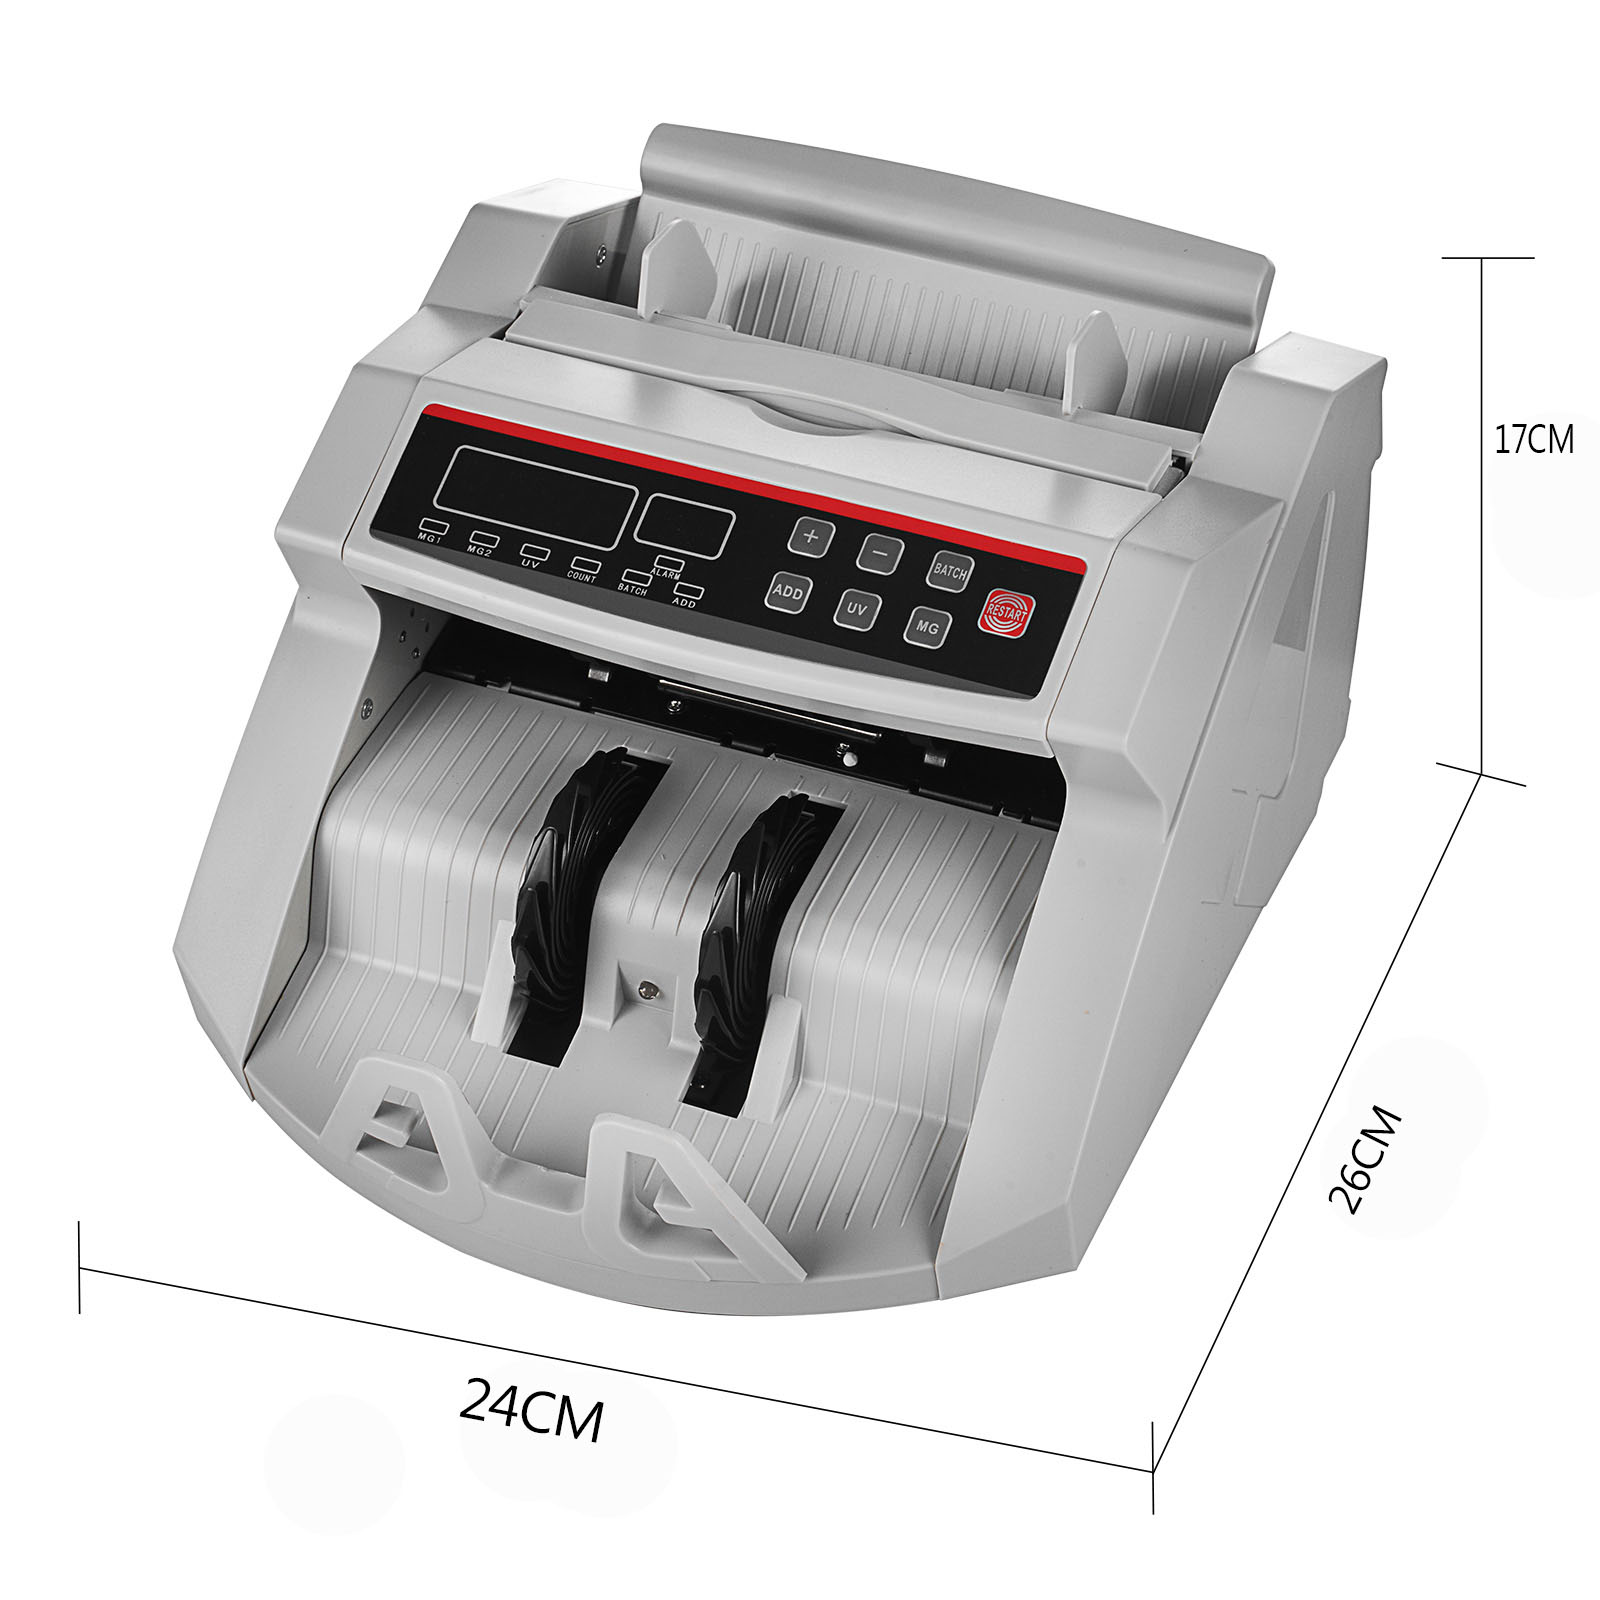 Money Cash Counting Bill Counter Bank Counterfeit Detector UV & MG Machine | eBay